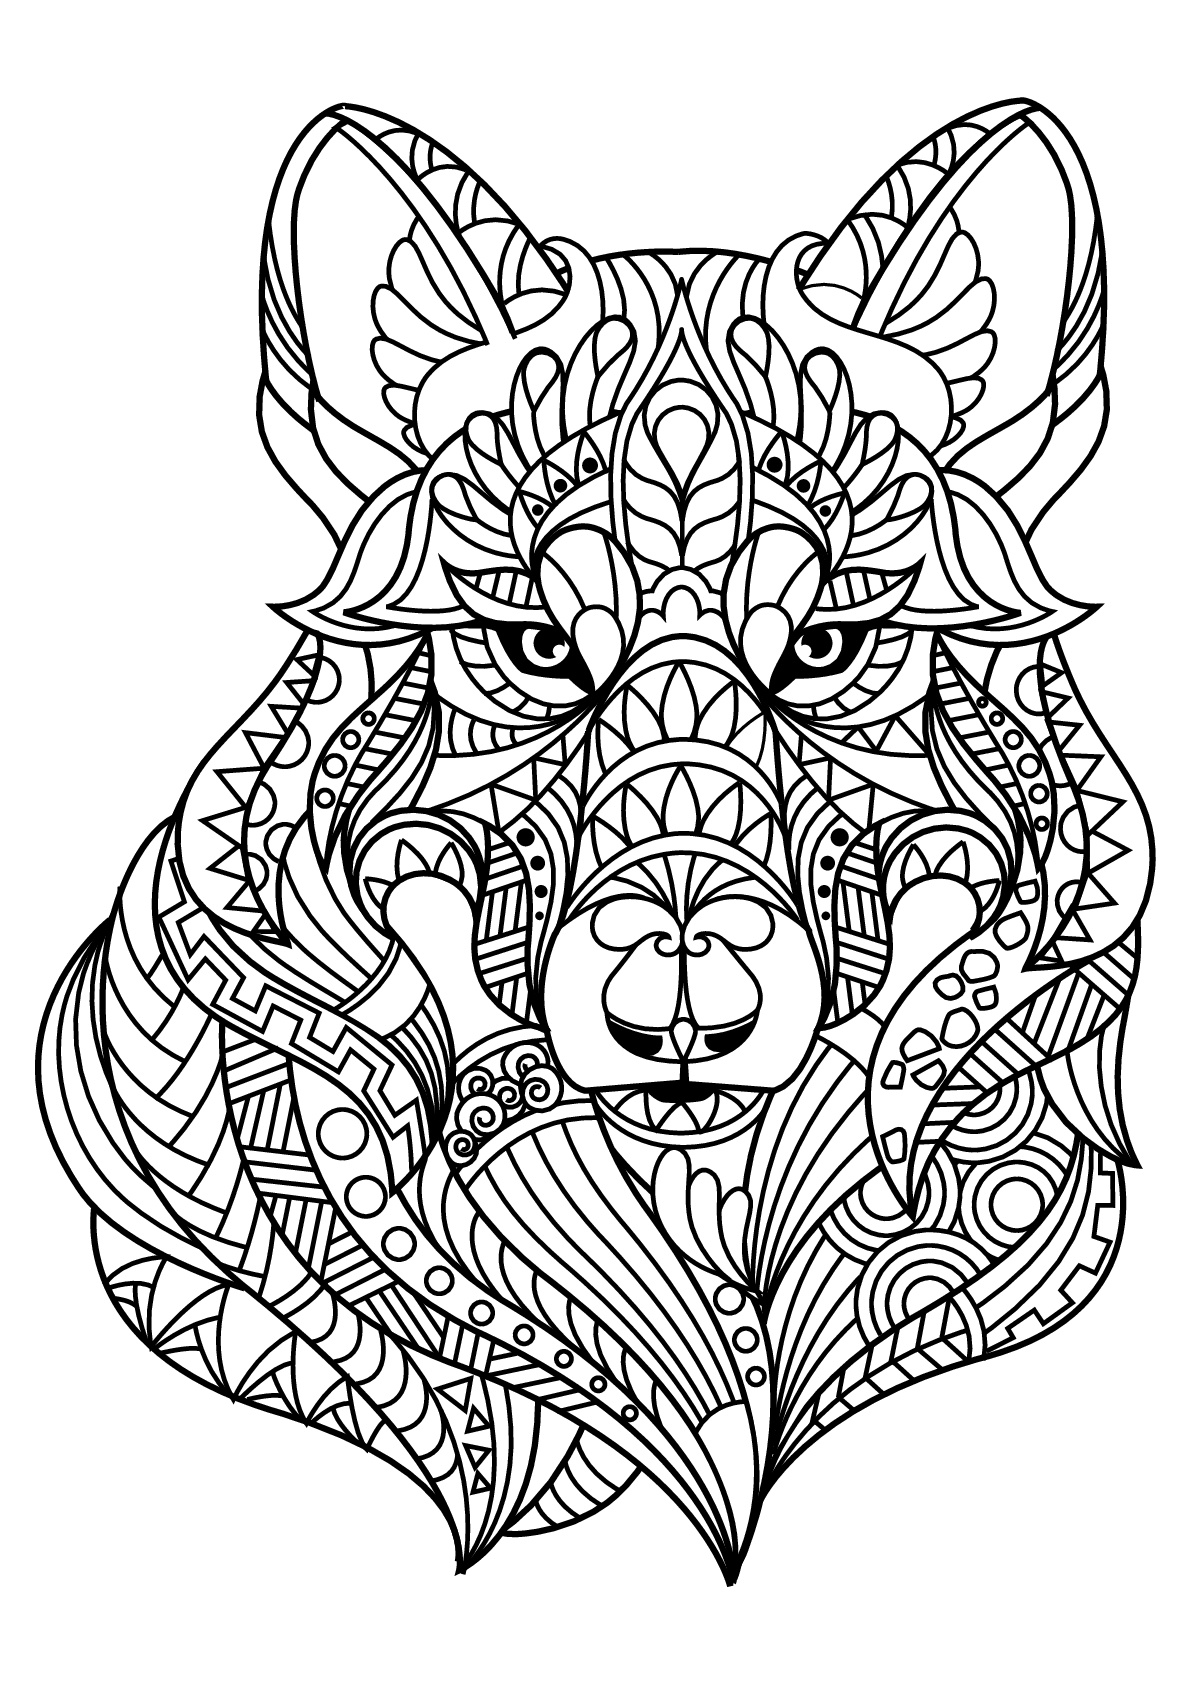 Desenhos para colorir gratuitos de Raposas para baixar - Raposas - Coloring  Pages for Adults